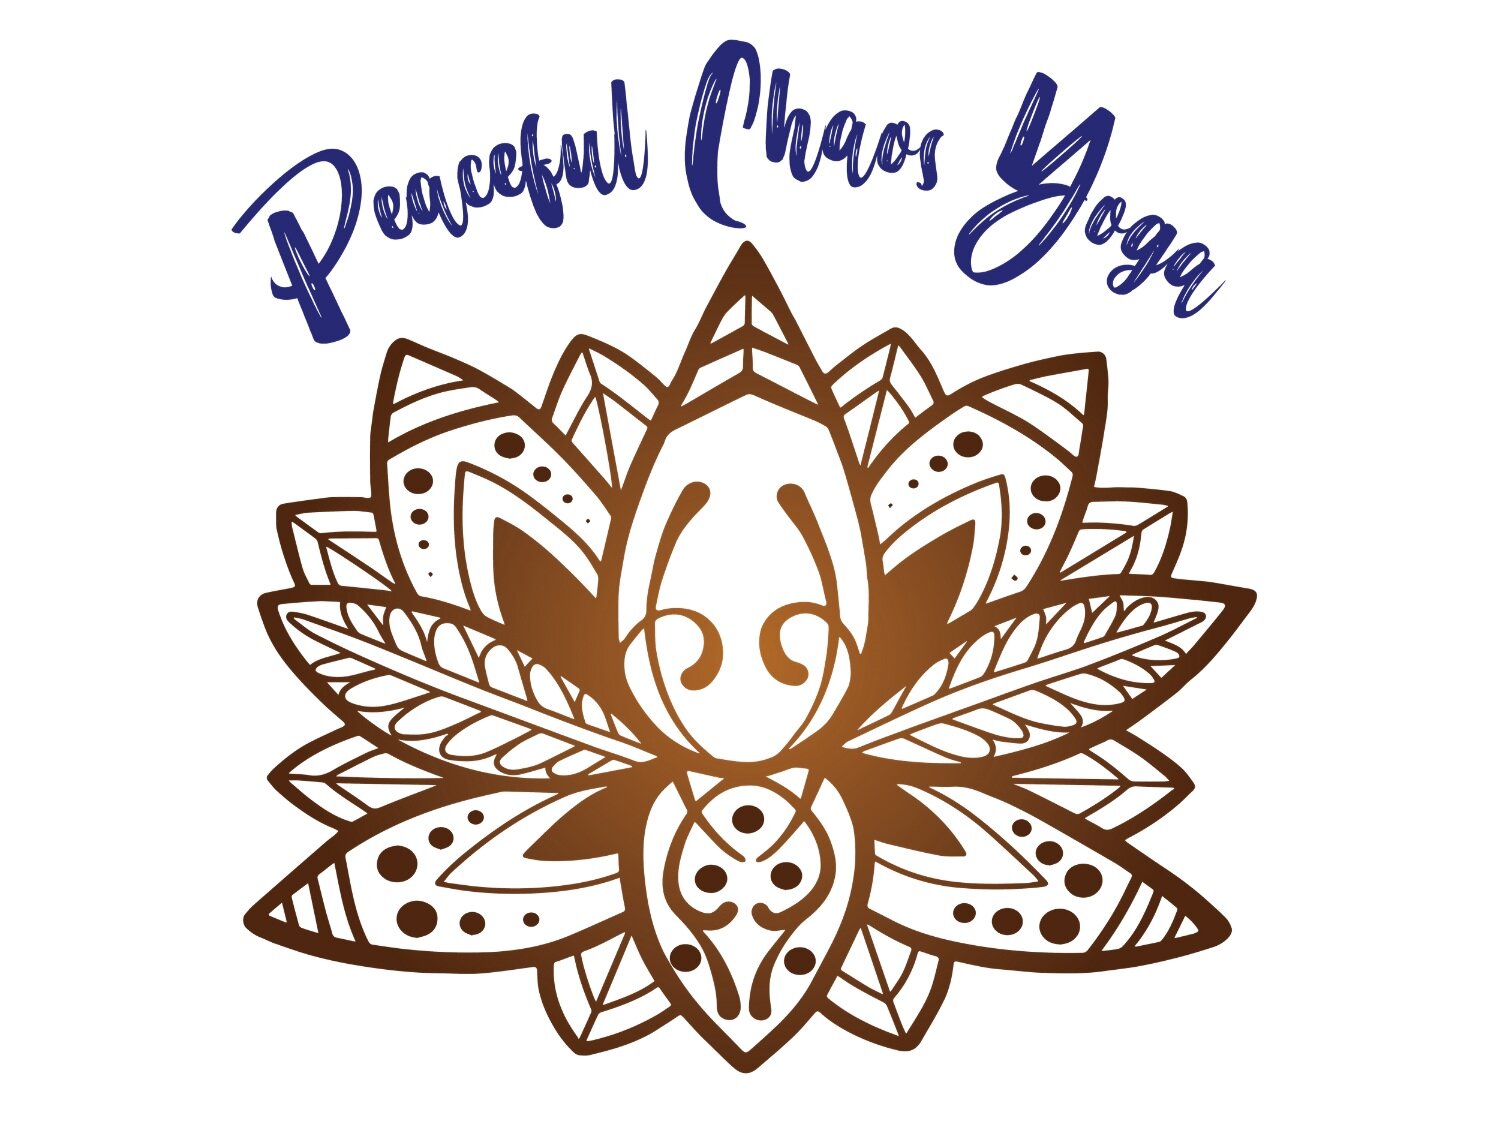 Peaceful Chaos Yoga